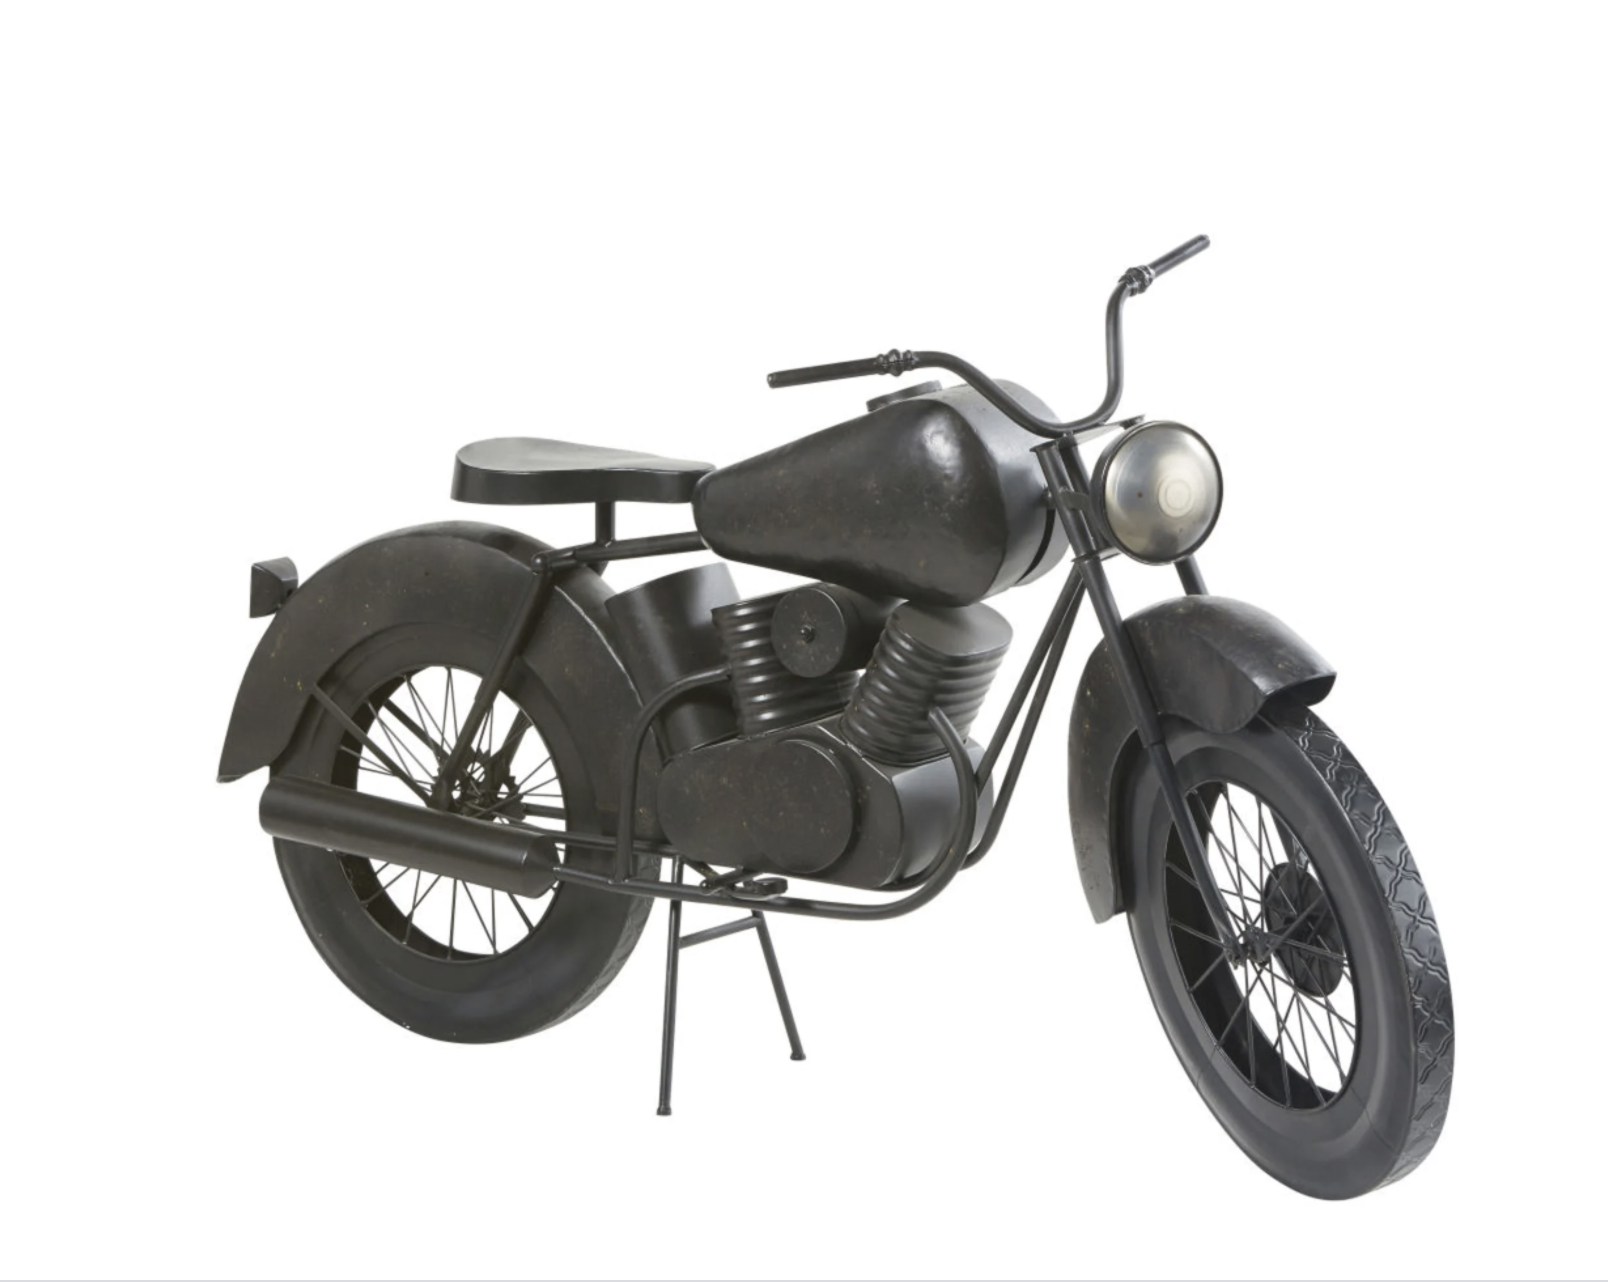 ELVIS Figur Motorrad aus Metall, schwarz in Antikoptik L145